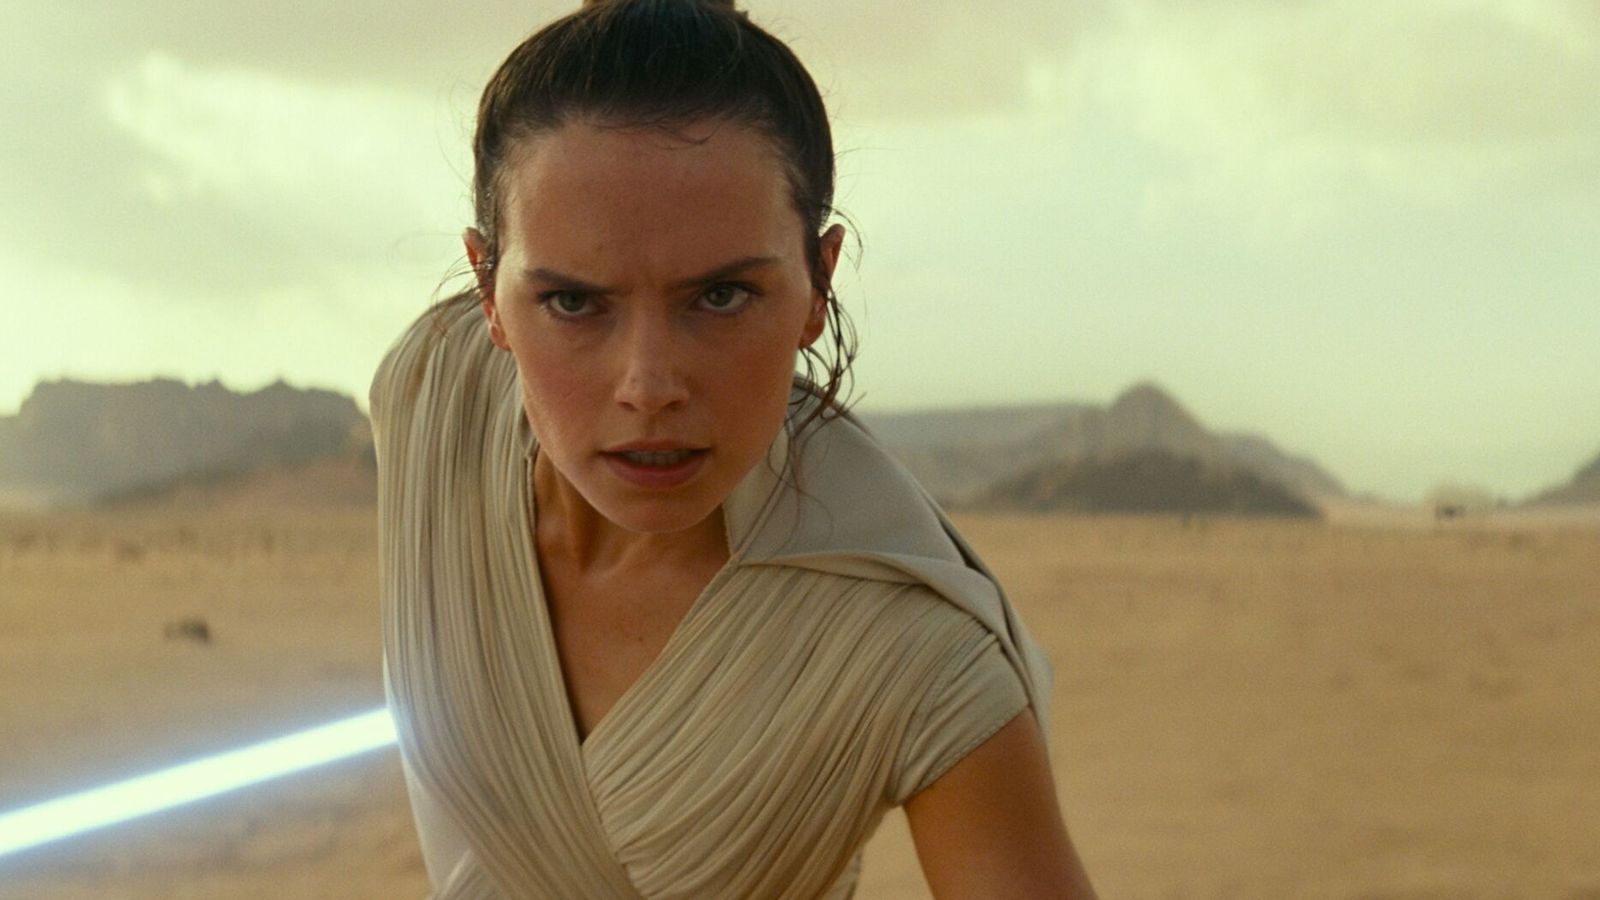 Star Wars announces three new films, as one star returns to a galaxy far, far away 